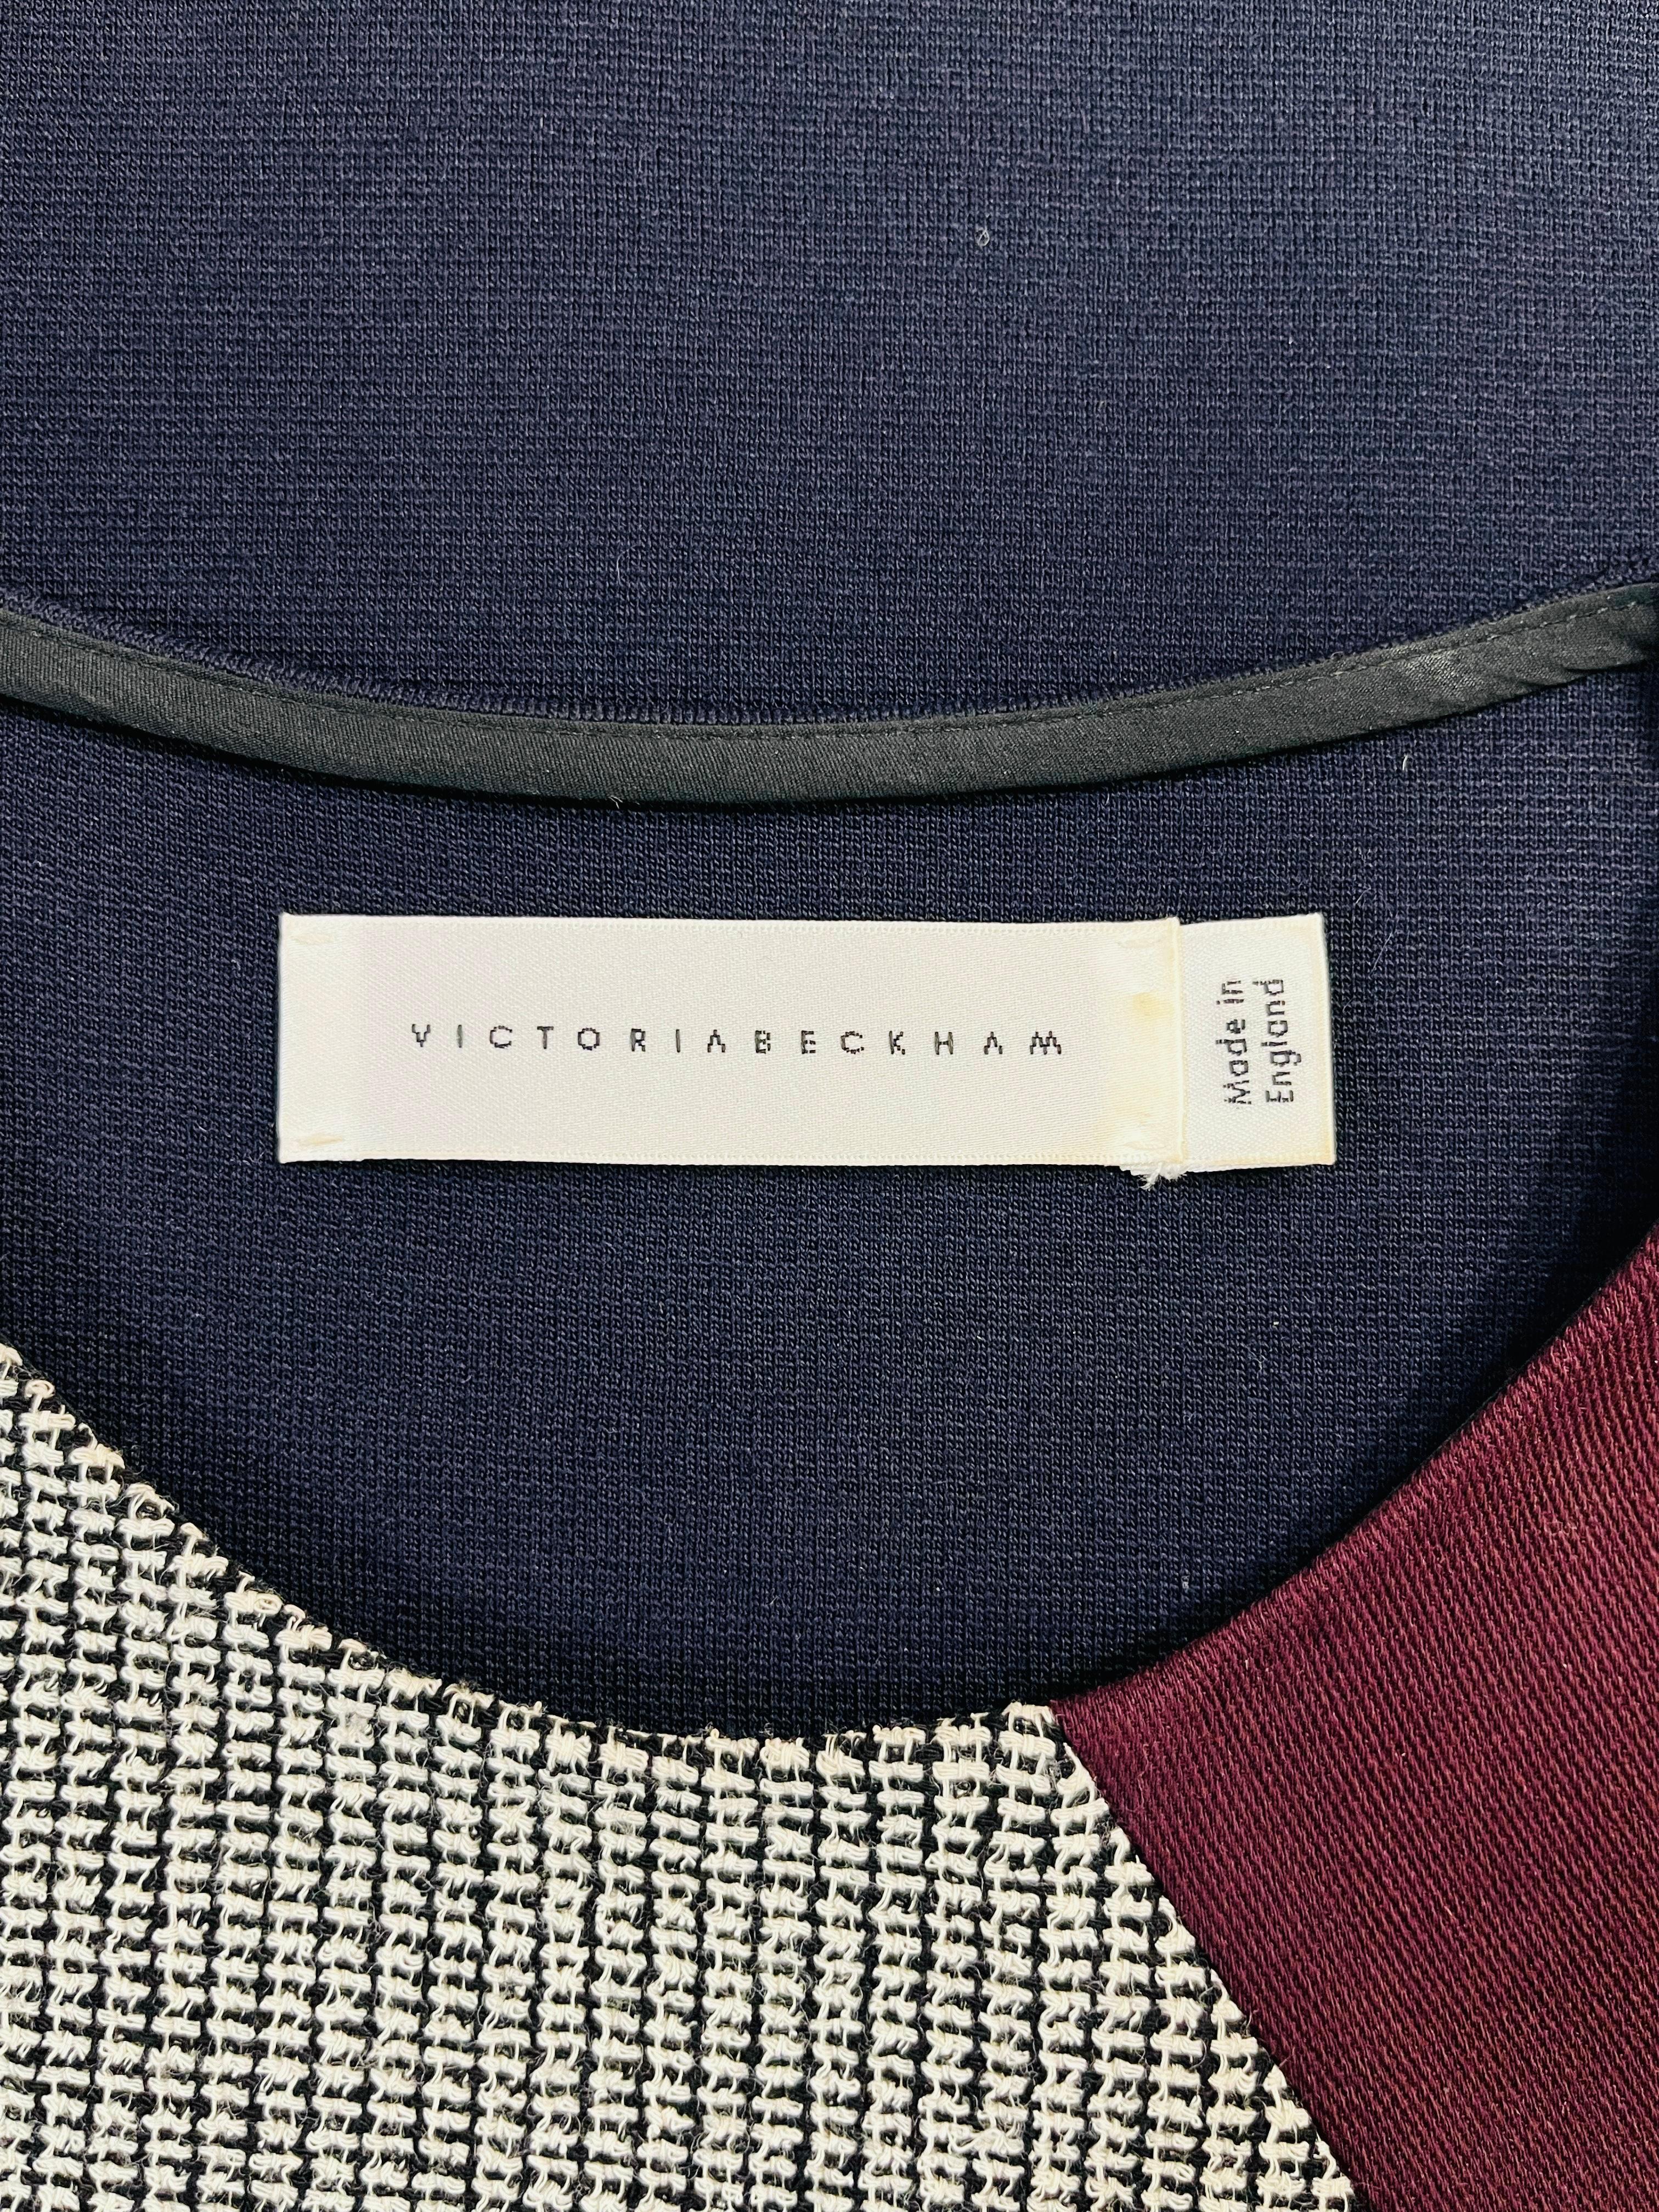 Victoria Beckham Wool Blend Panelled Top For Sale 1